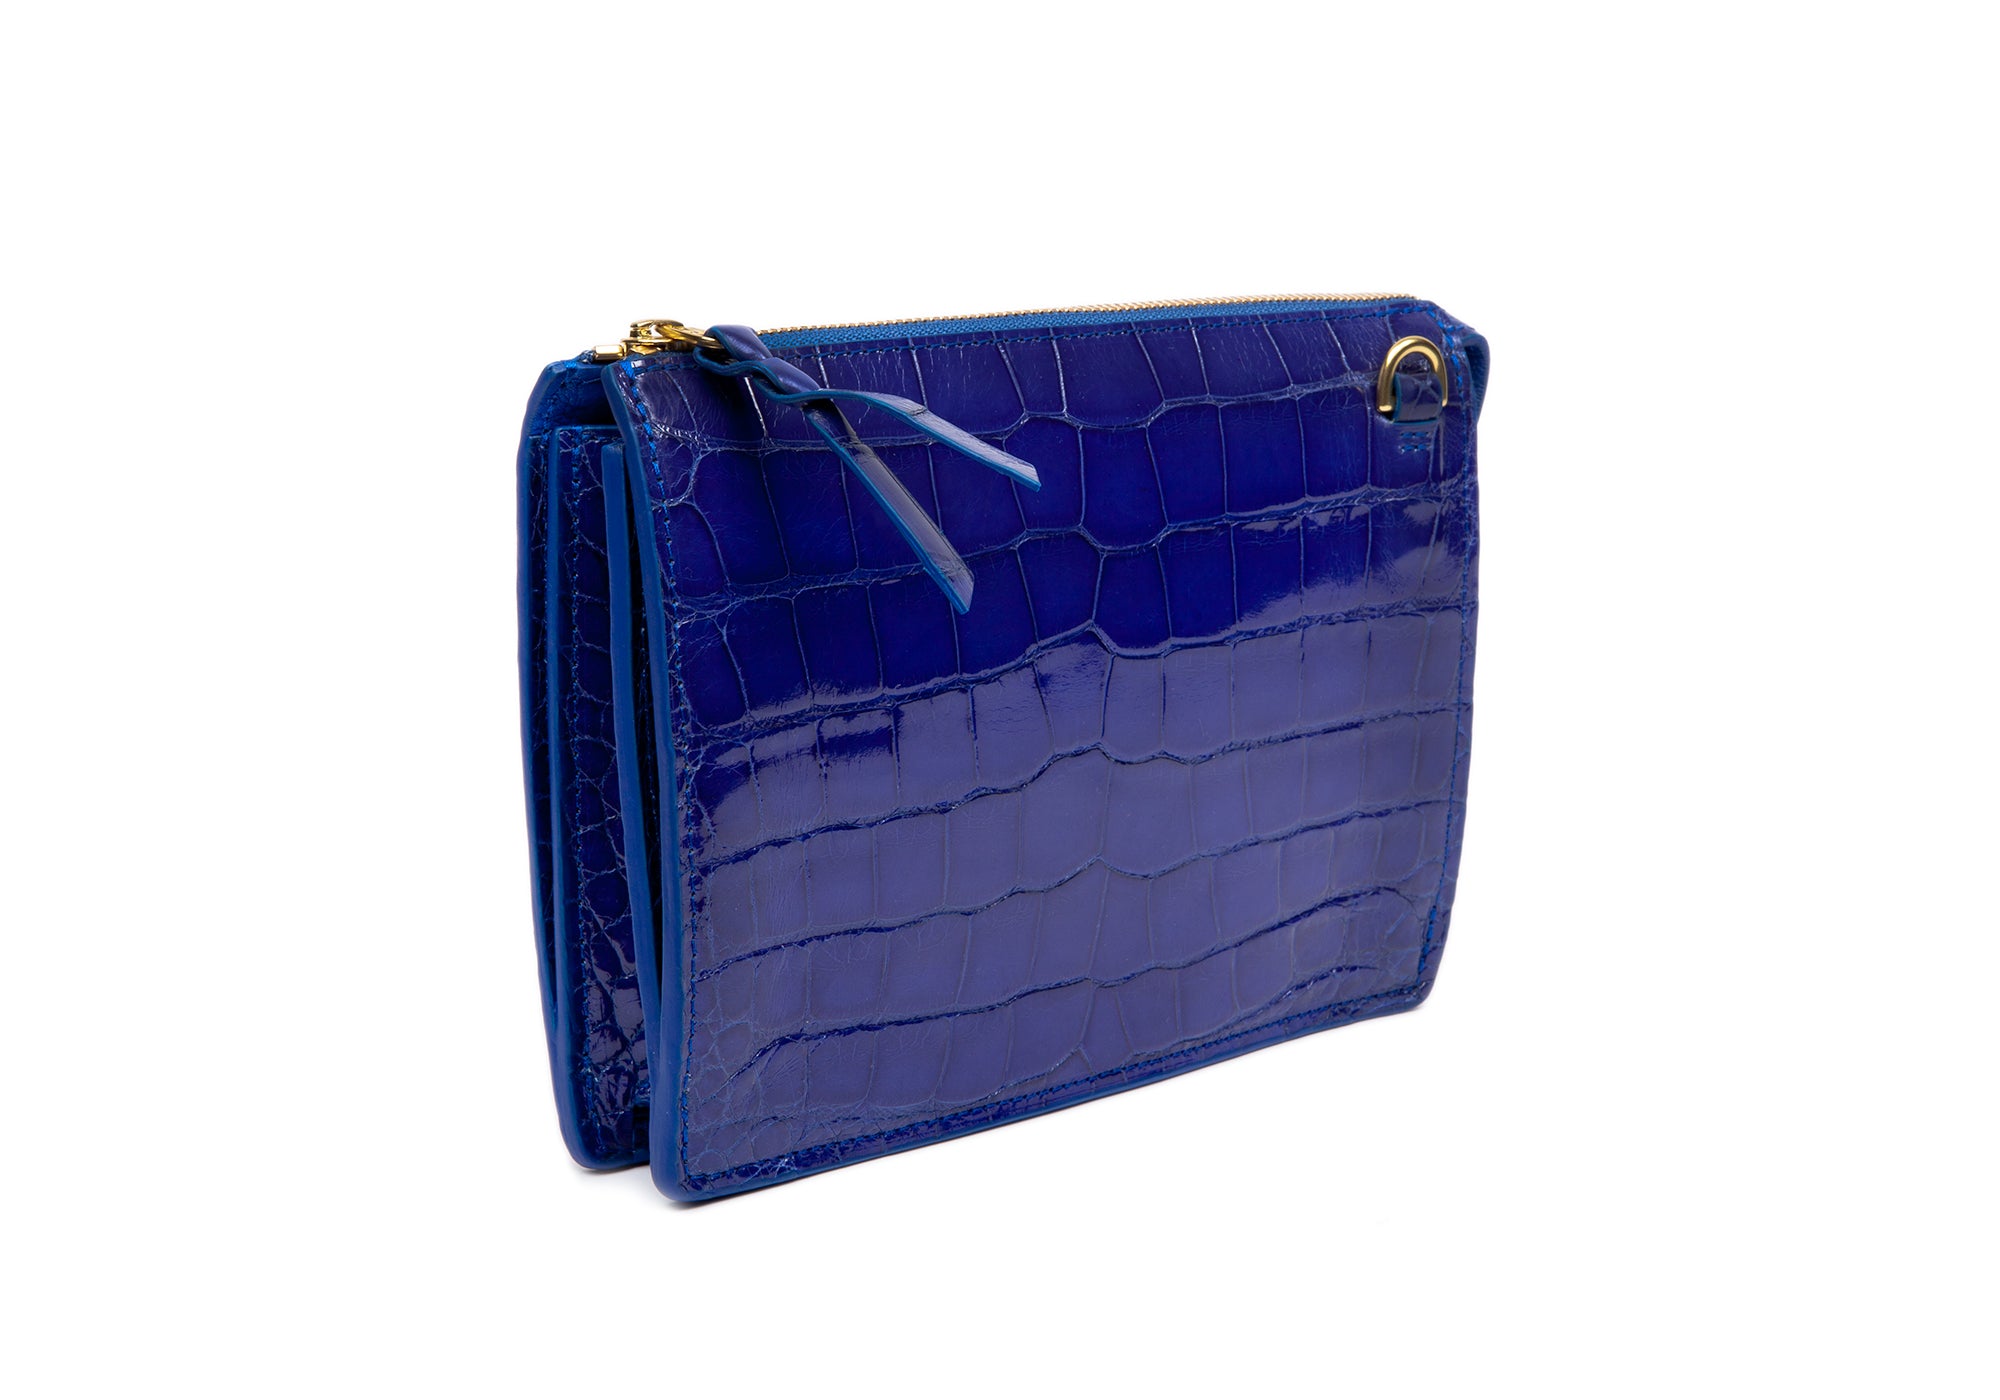 Nifty Camera Bag - Electric Blue | Bags, Nylon cross body bag, Camera bag